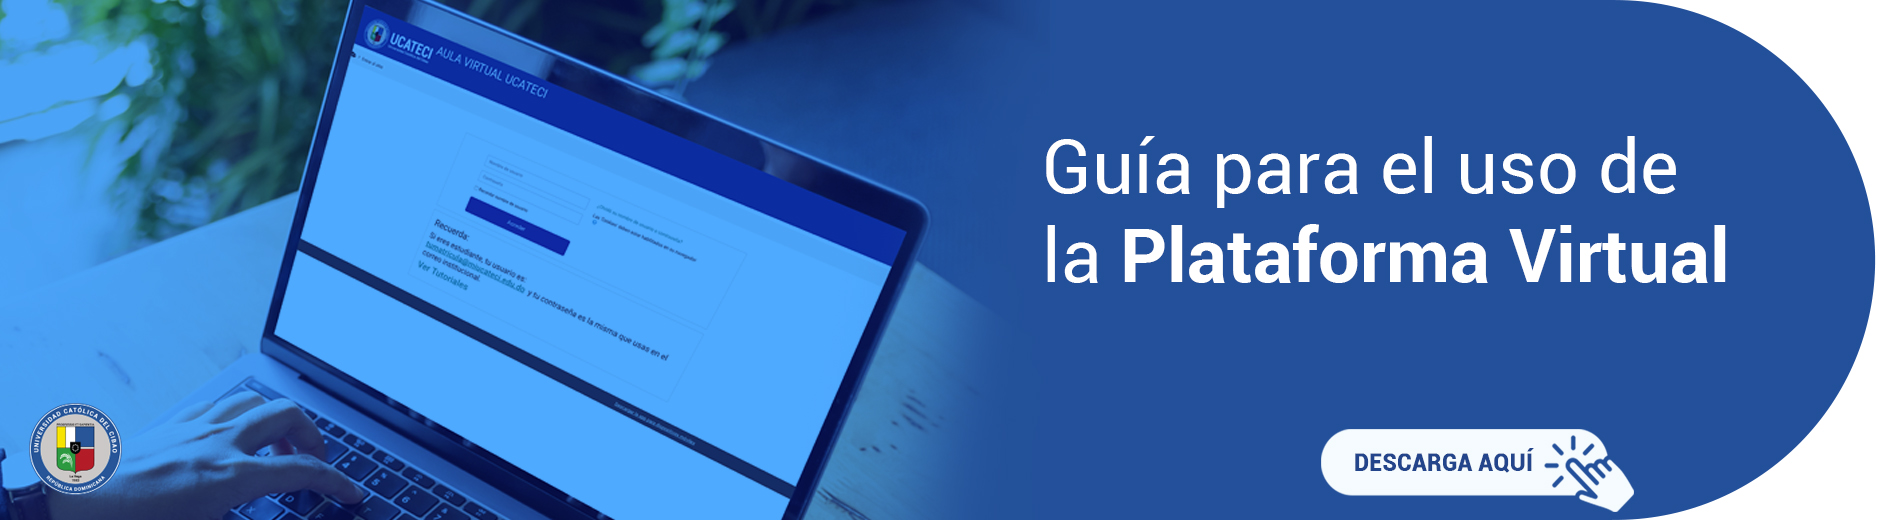 Banner_Web_Guia_Uso_de_la_Plataforma_Virtual